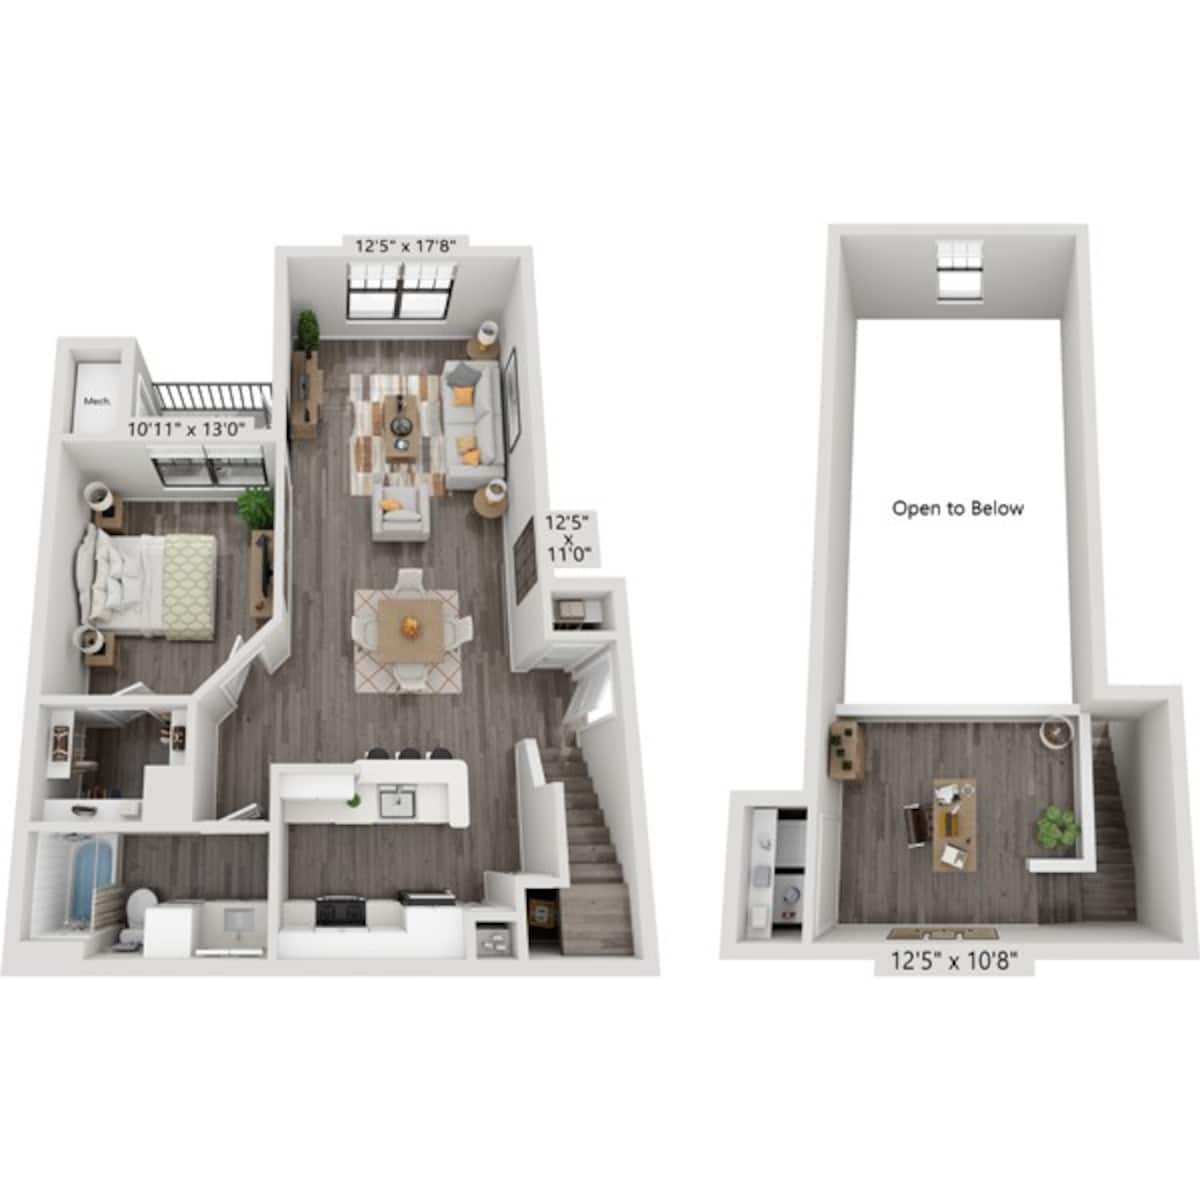 Floorplan diagram for One Bedroom A1E1L, showing 1 bedroom